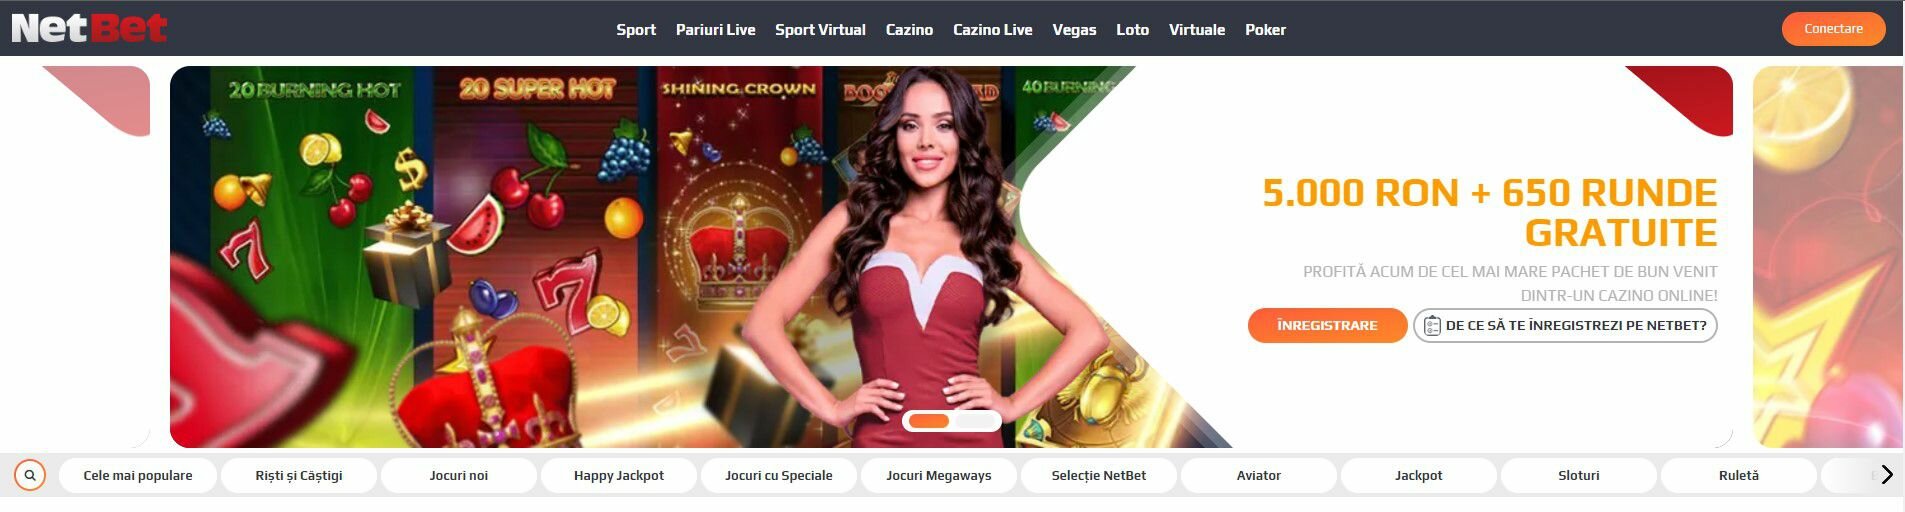 Netbet Casino página principal.